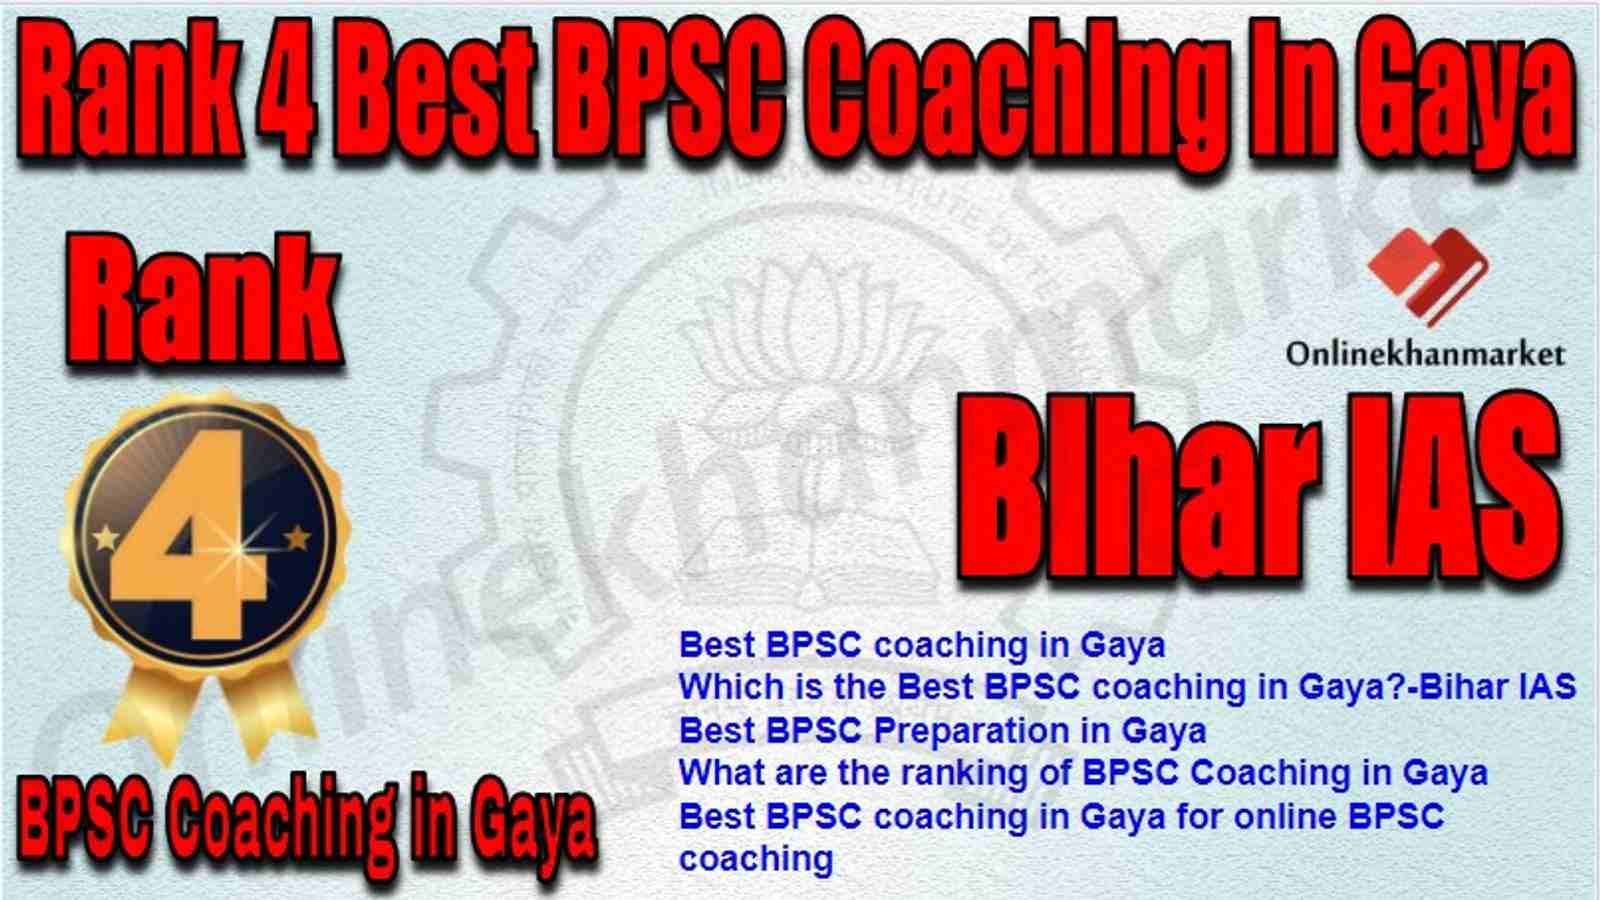 Rank 4 Best BPSC Coaching in gaya